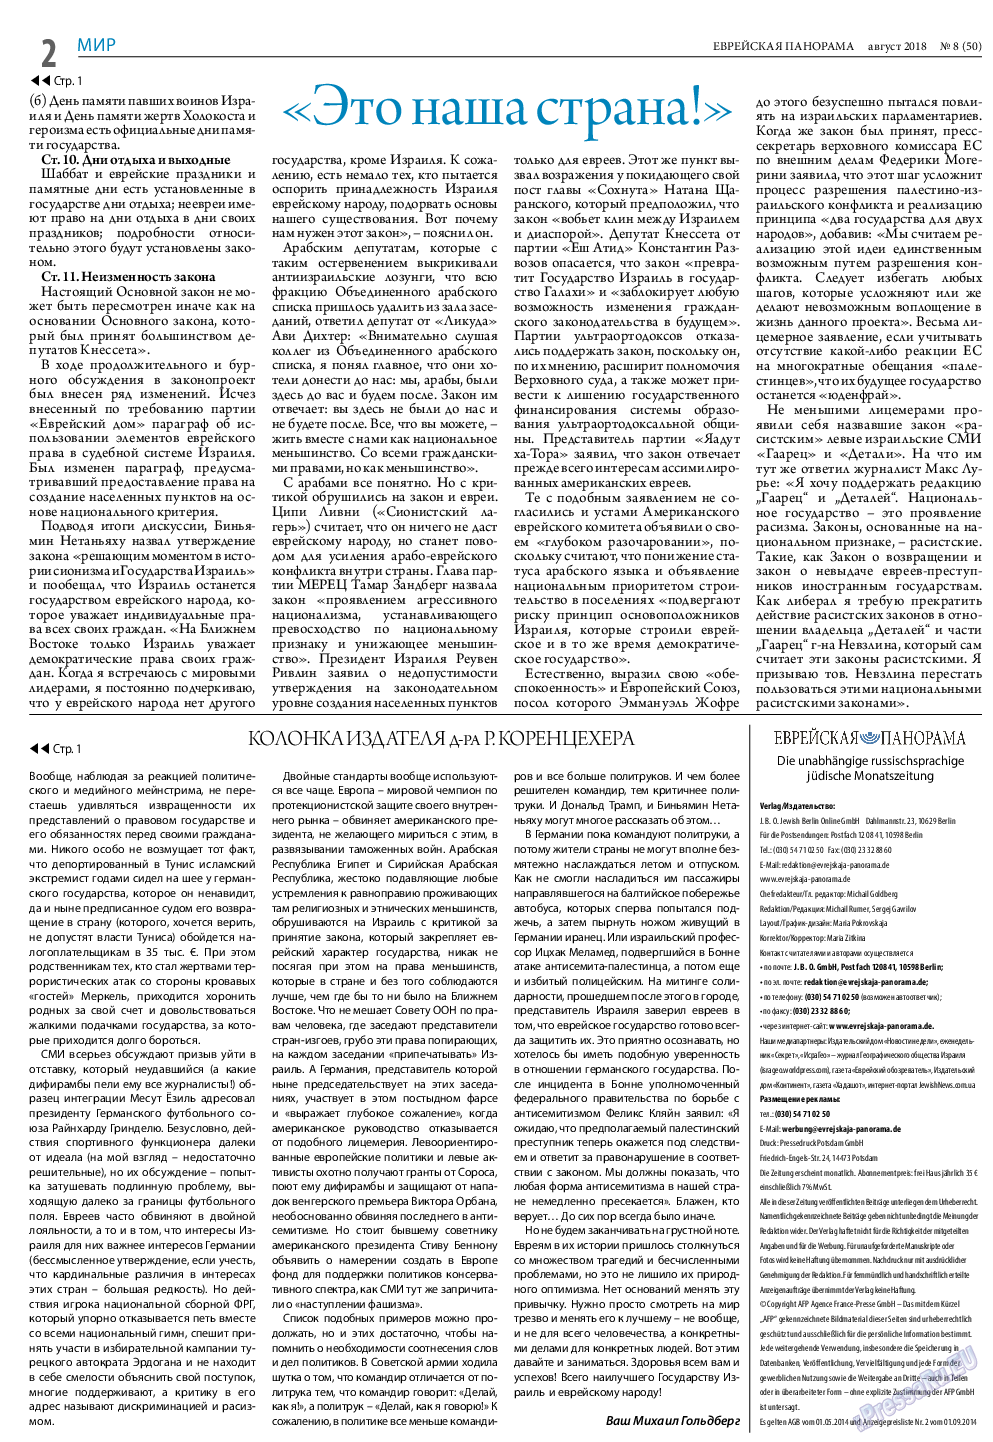 Еврейская панорама, газета. 2018 №8 стр.2